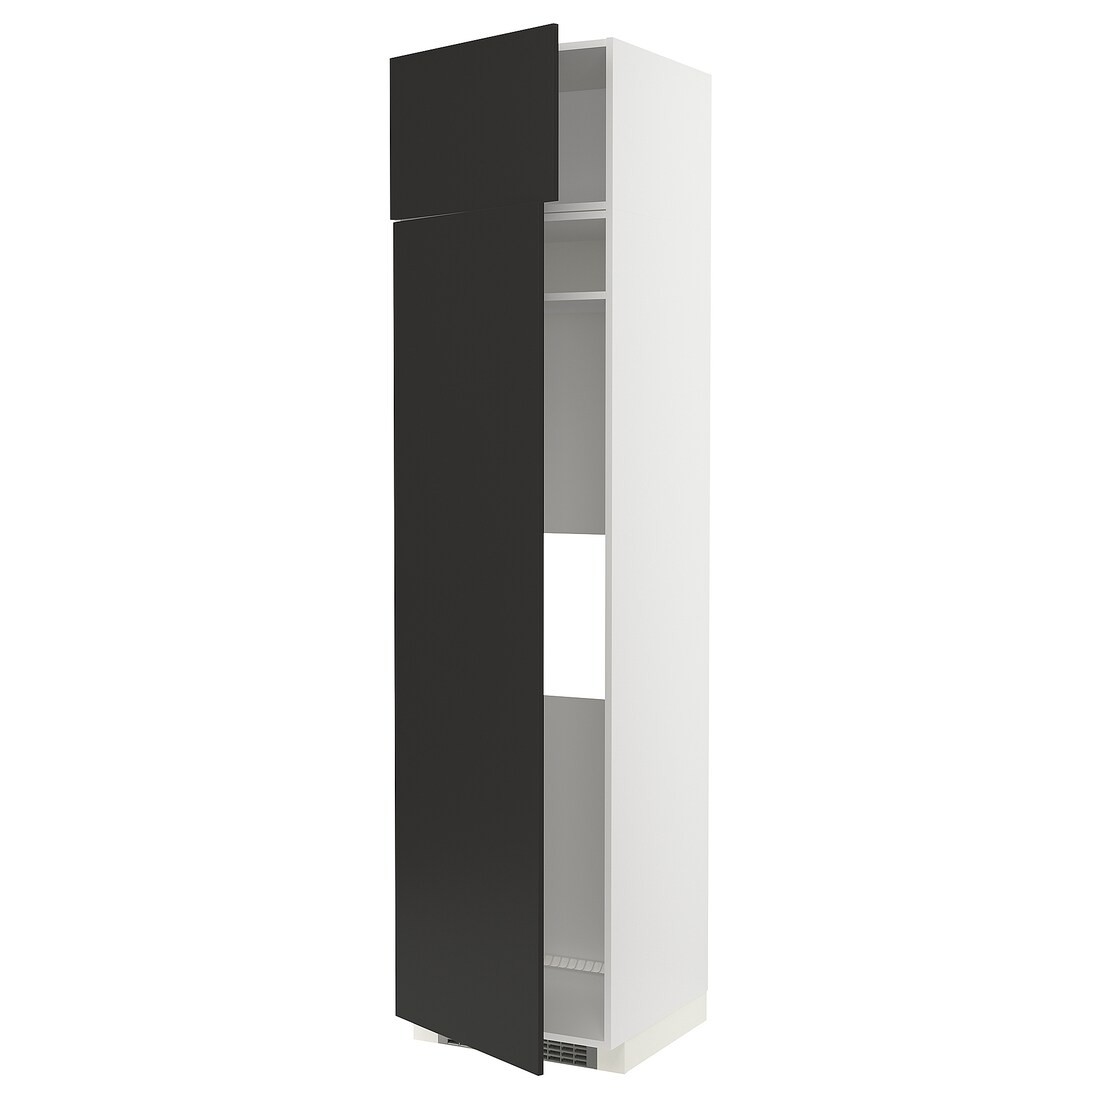 METOD МЕТОД Высокий шкаф для холодильника / морозильника, белый / Nickebo матовый антрацит, 60x60x240 см